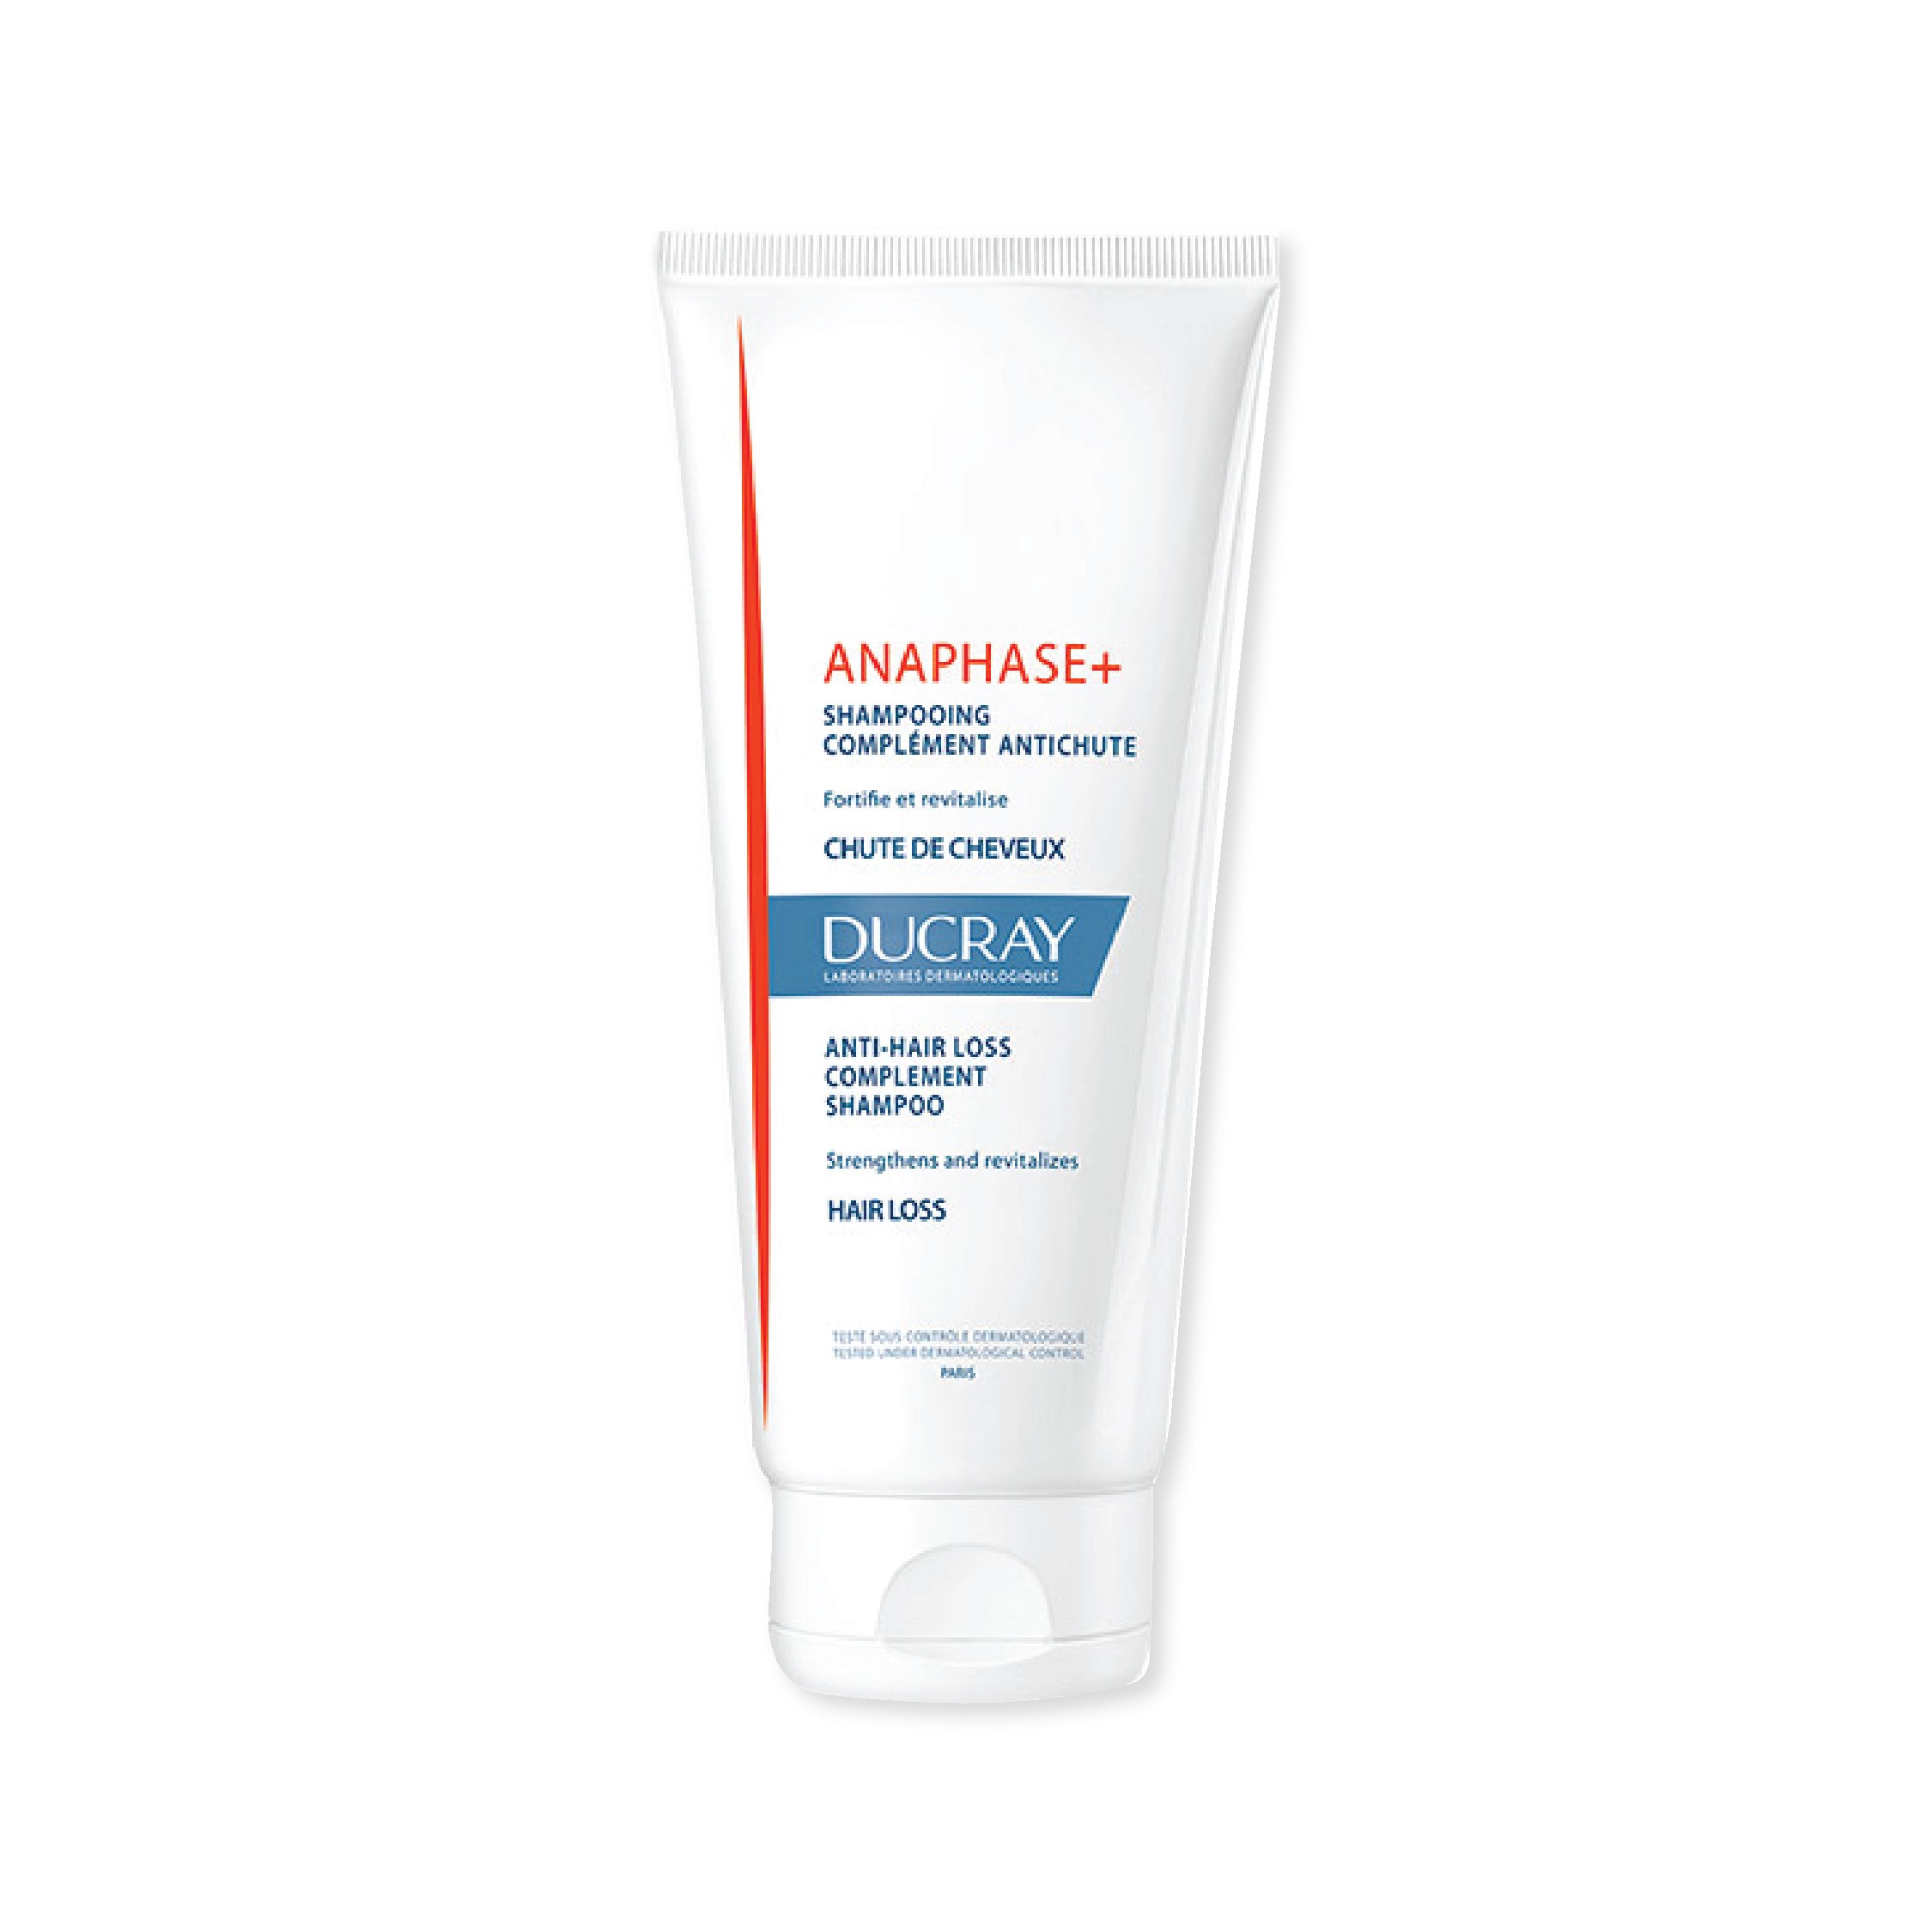 Anaphase + Shampoo - 0